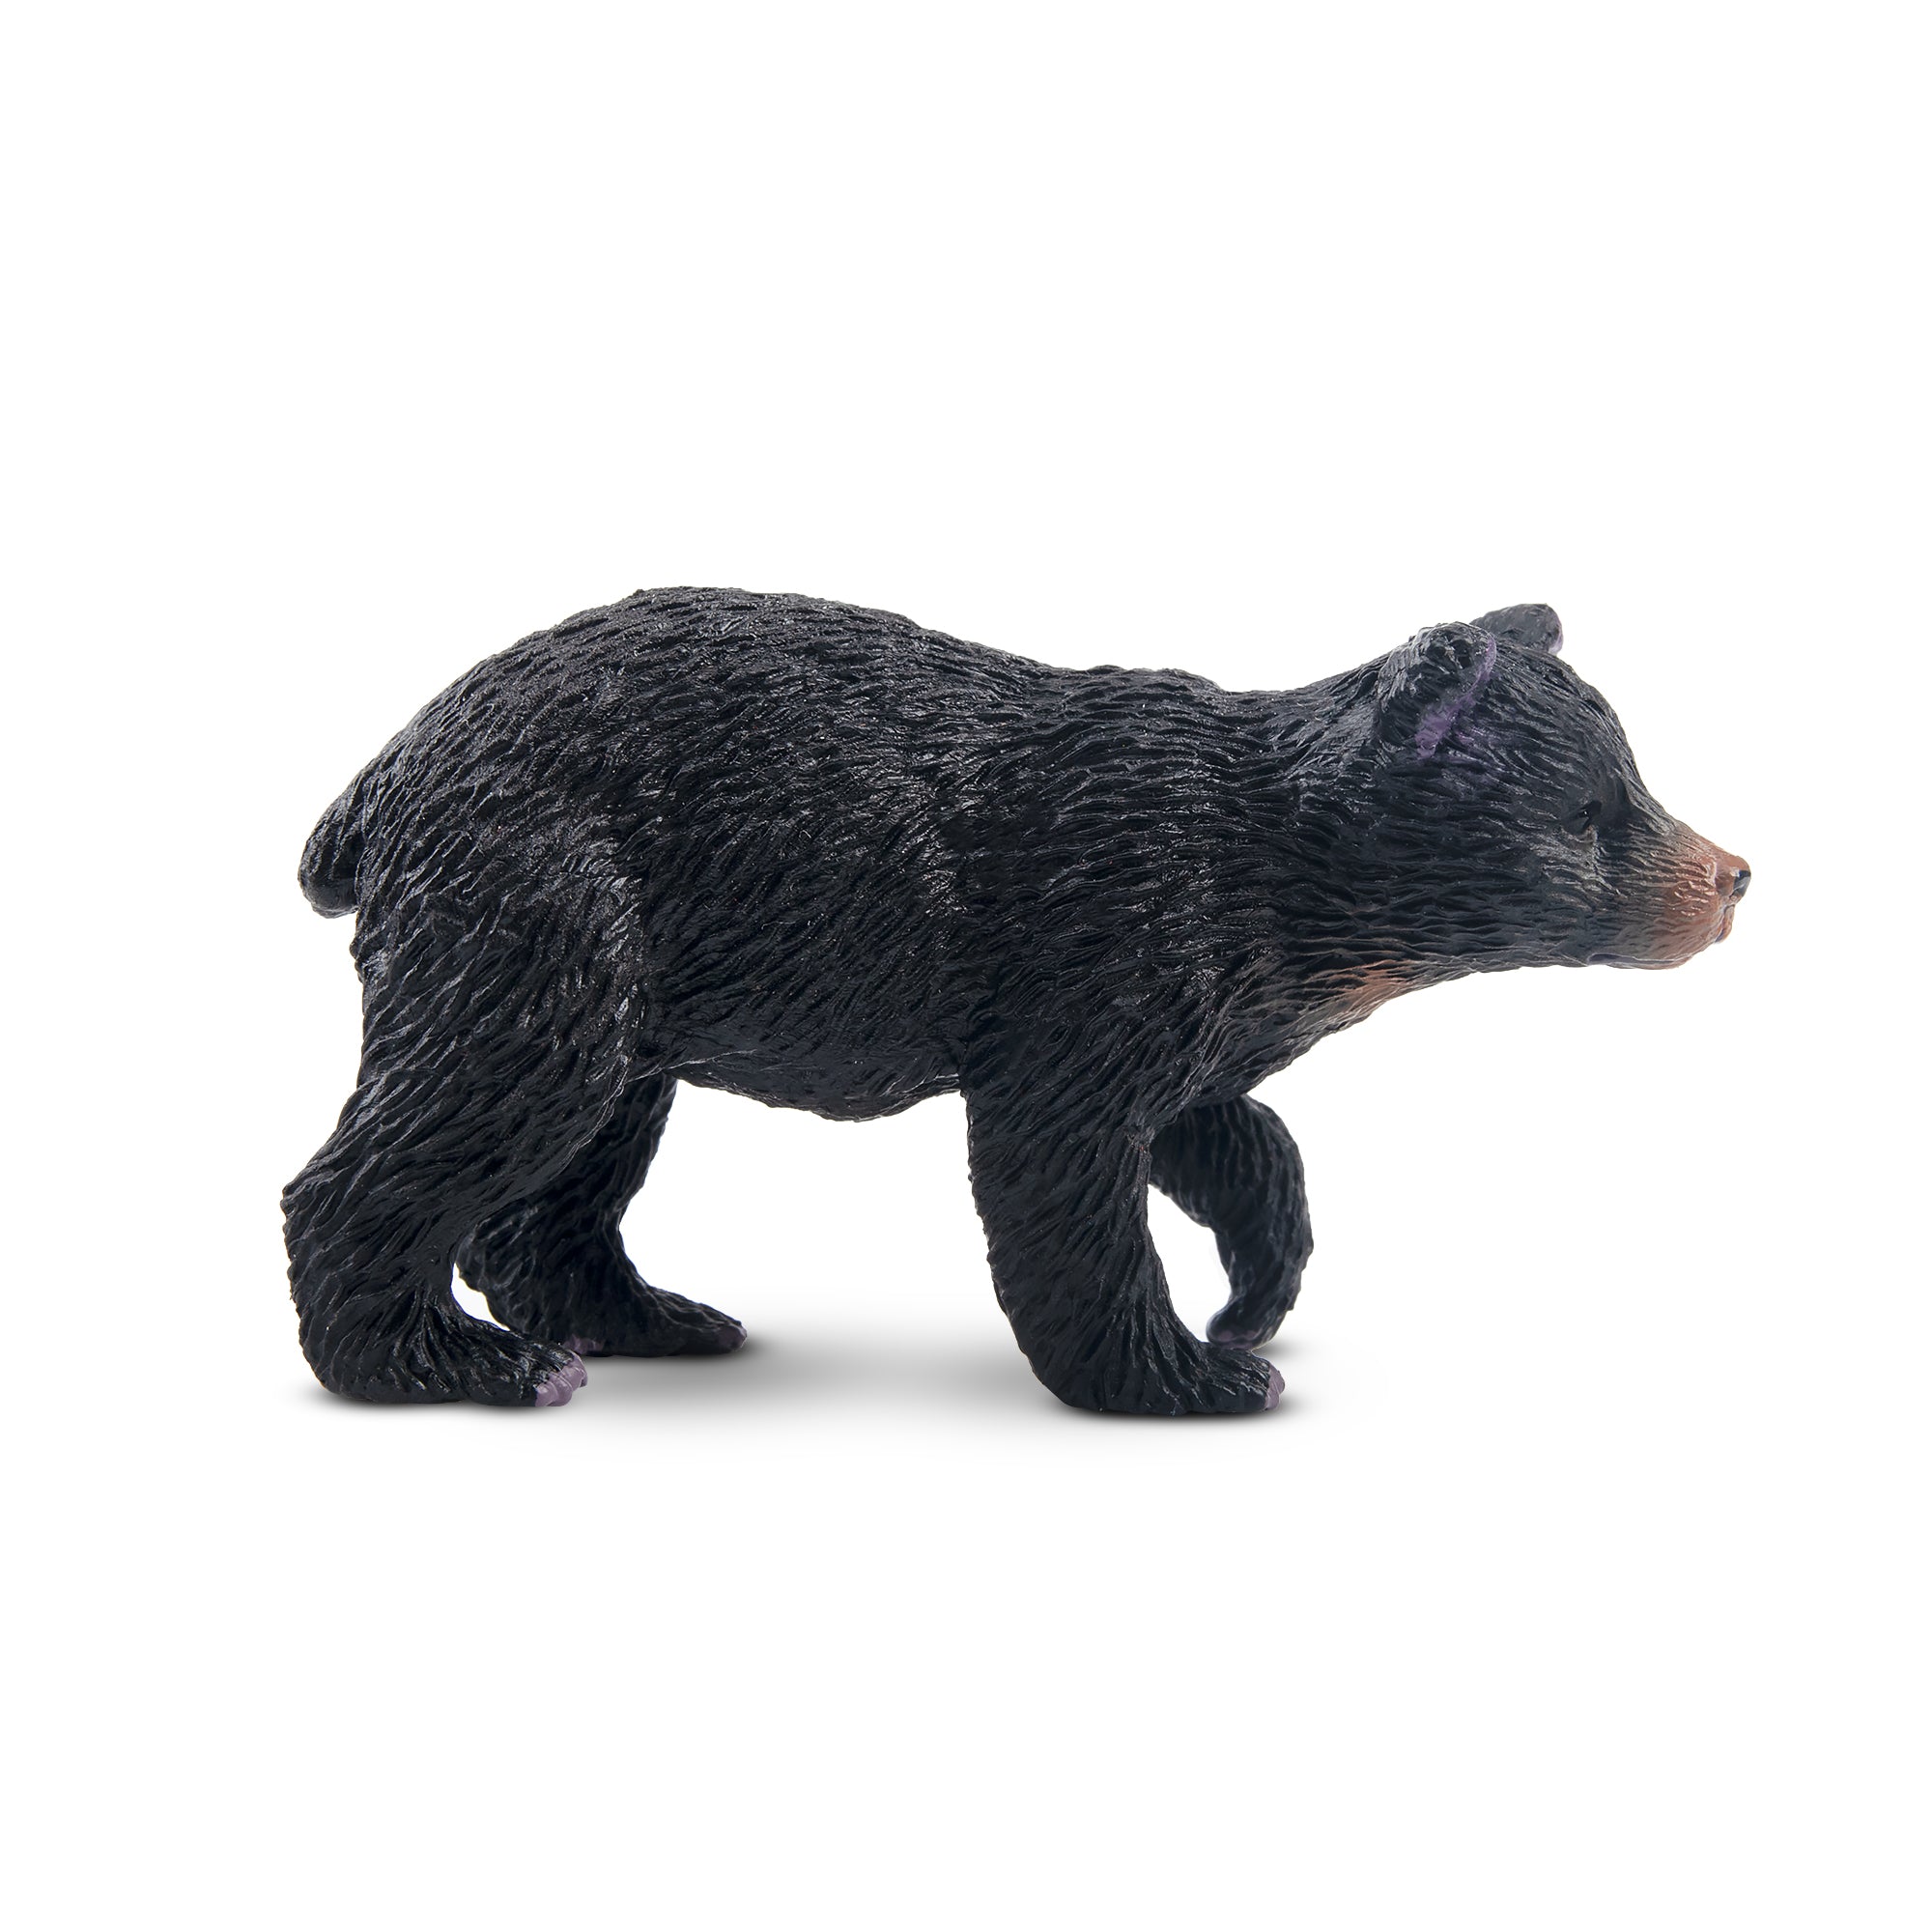 Toymany Black Bear Cub with Raised Paws Figurine Toy-2